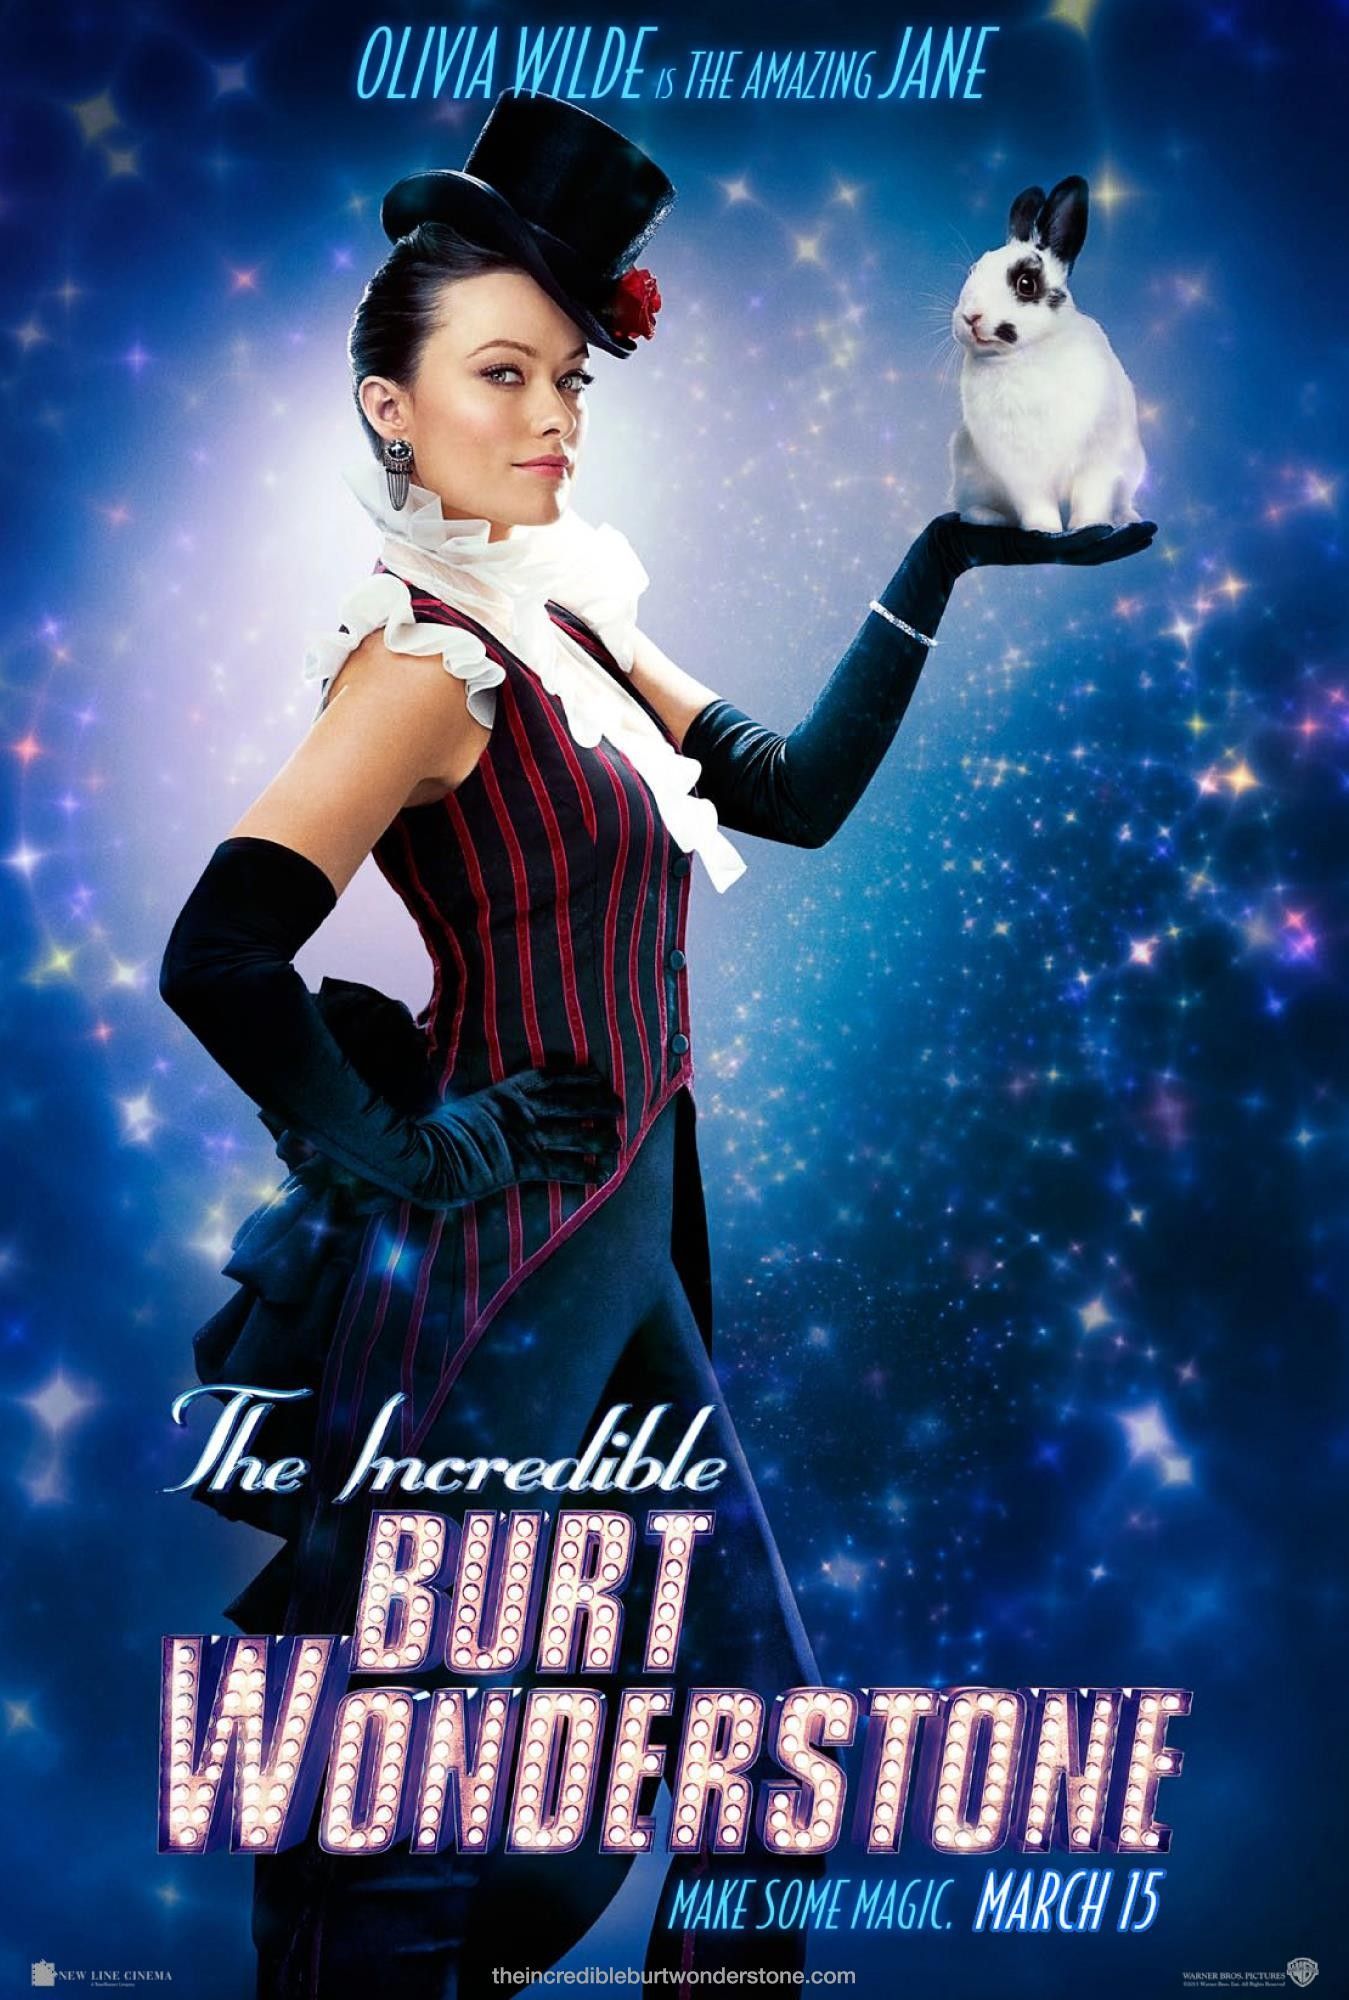 The Incredible Burt Wonderstone Olivia Wilde Character Poster